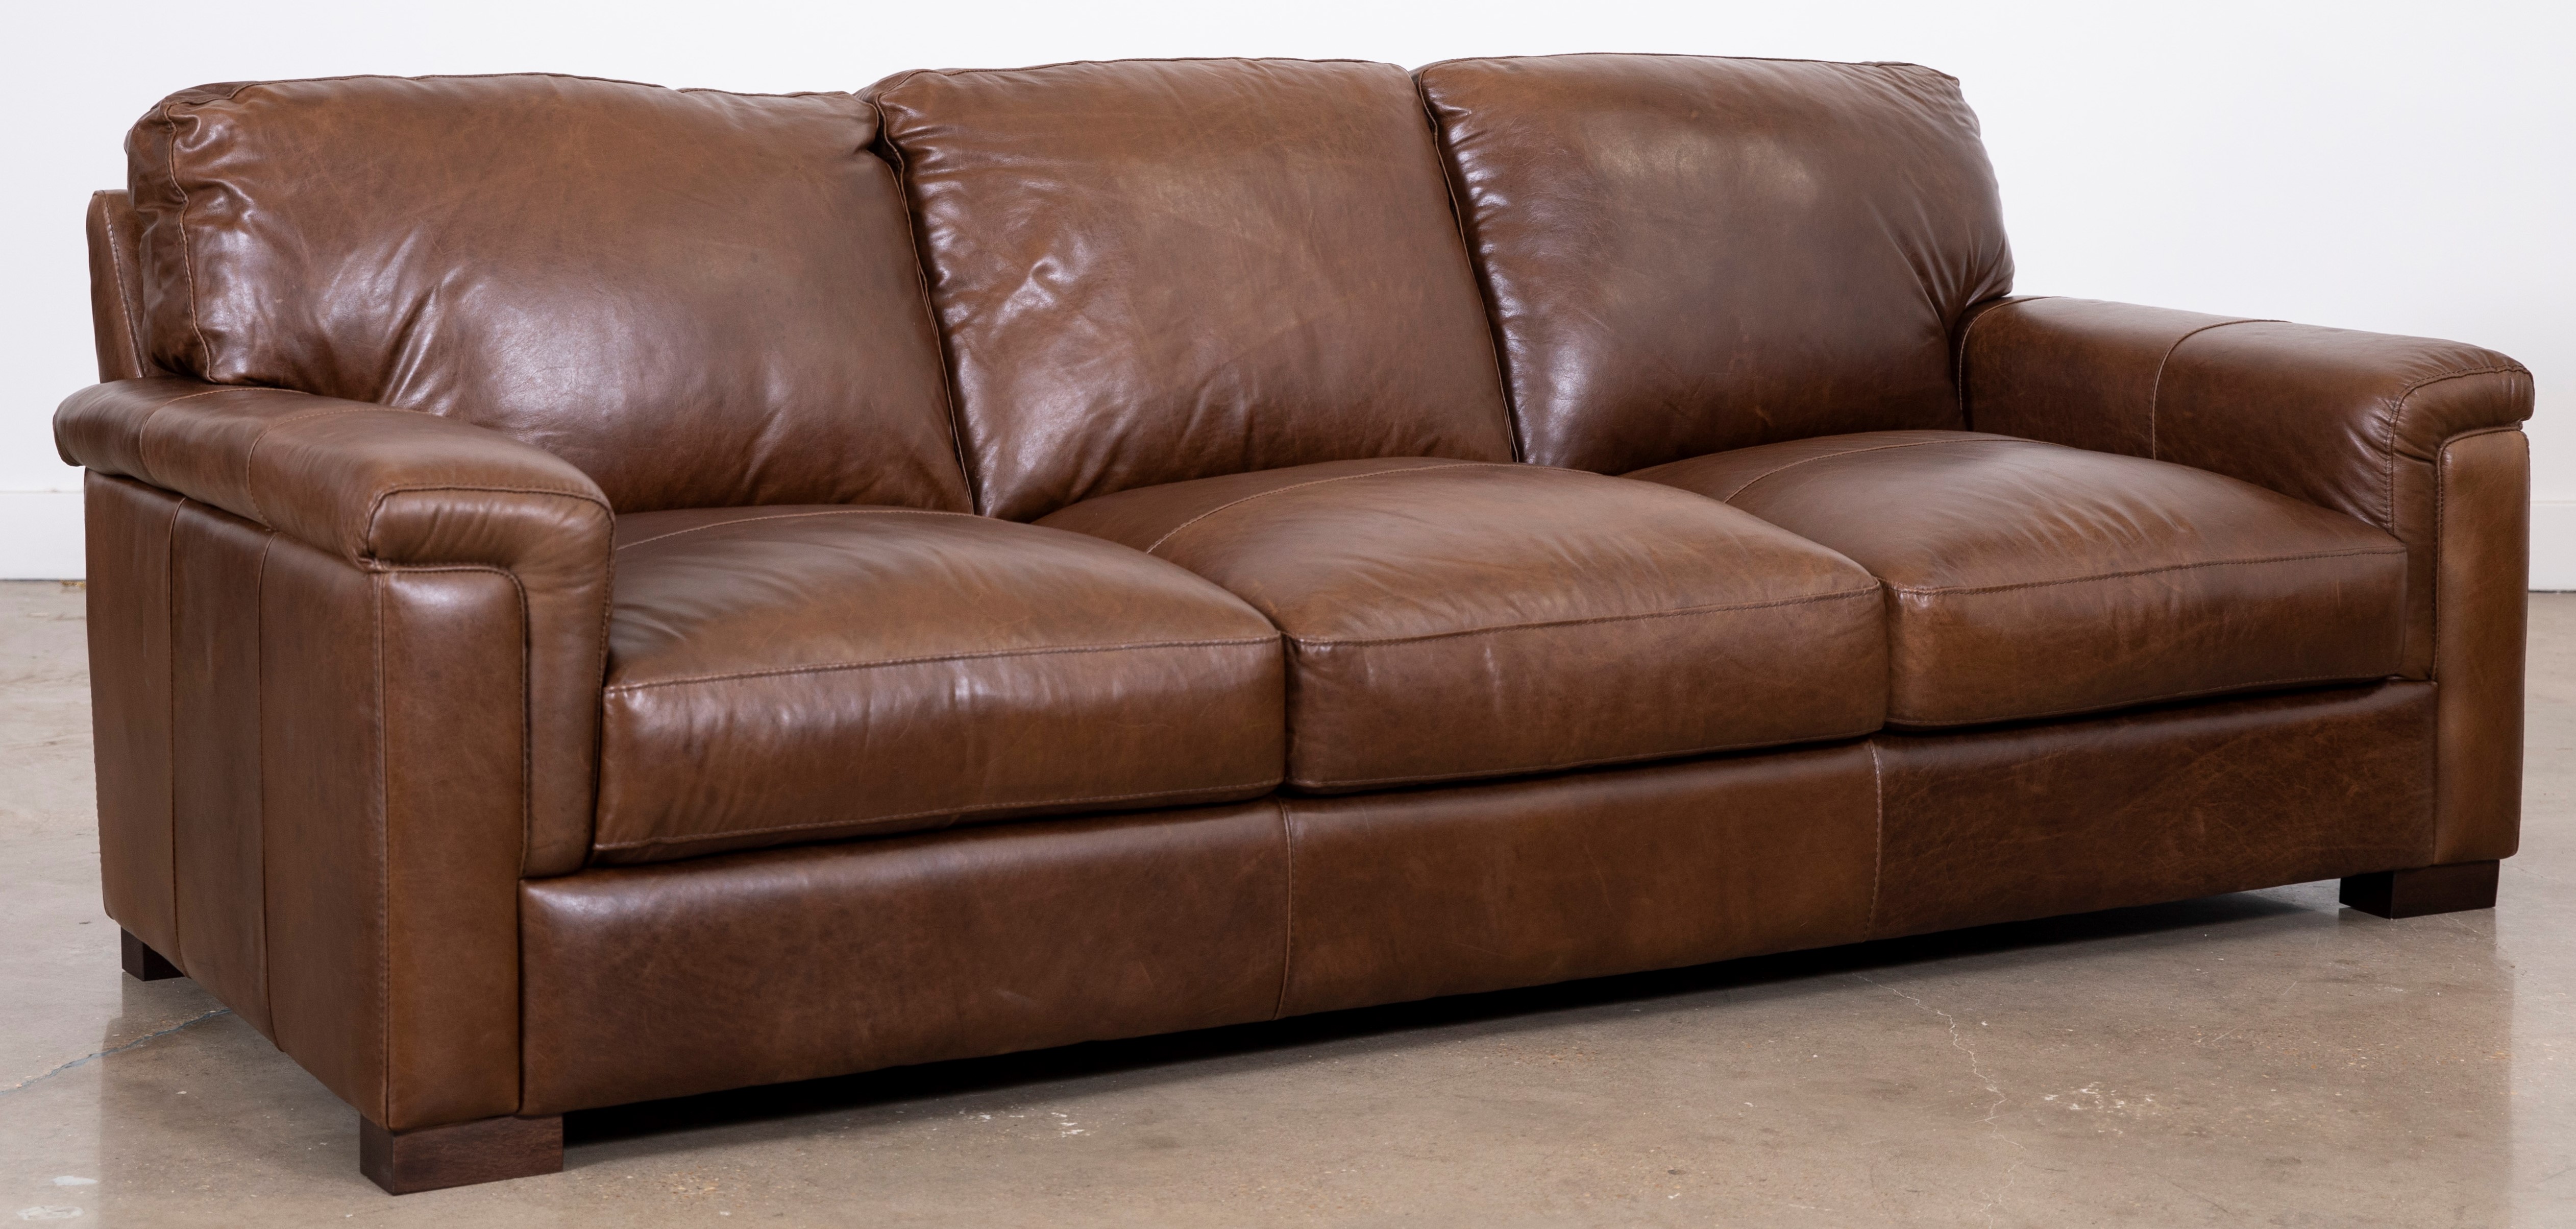 sof tline leather sofa 4883